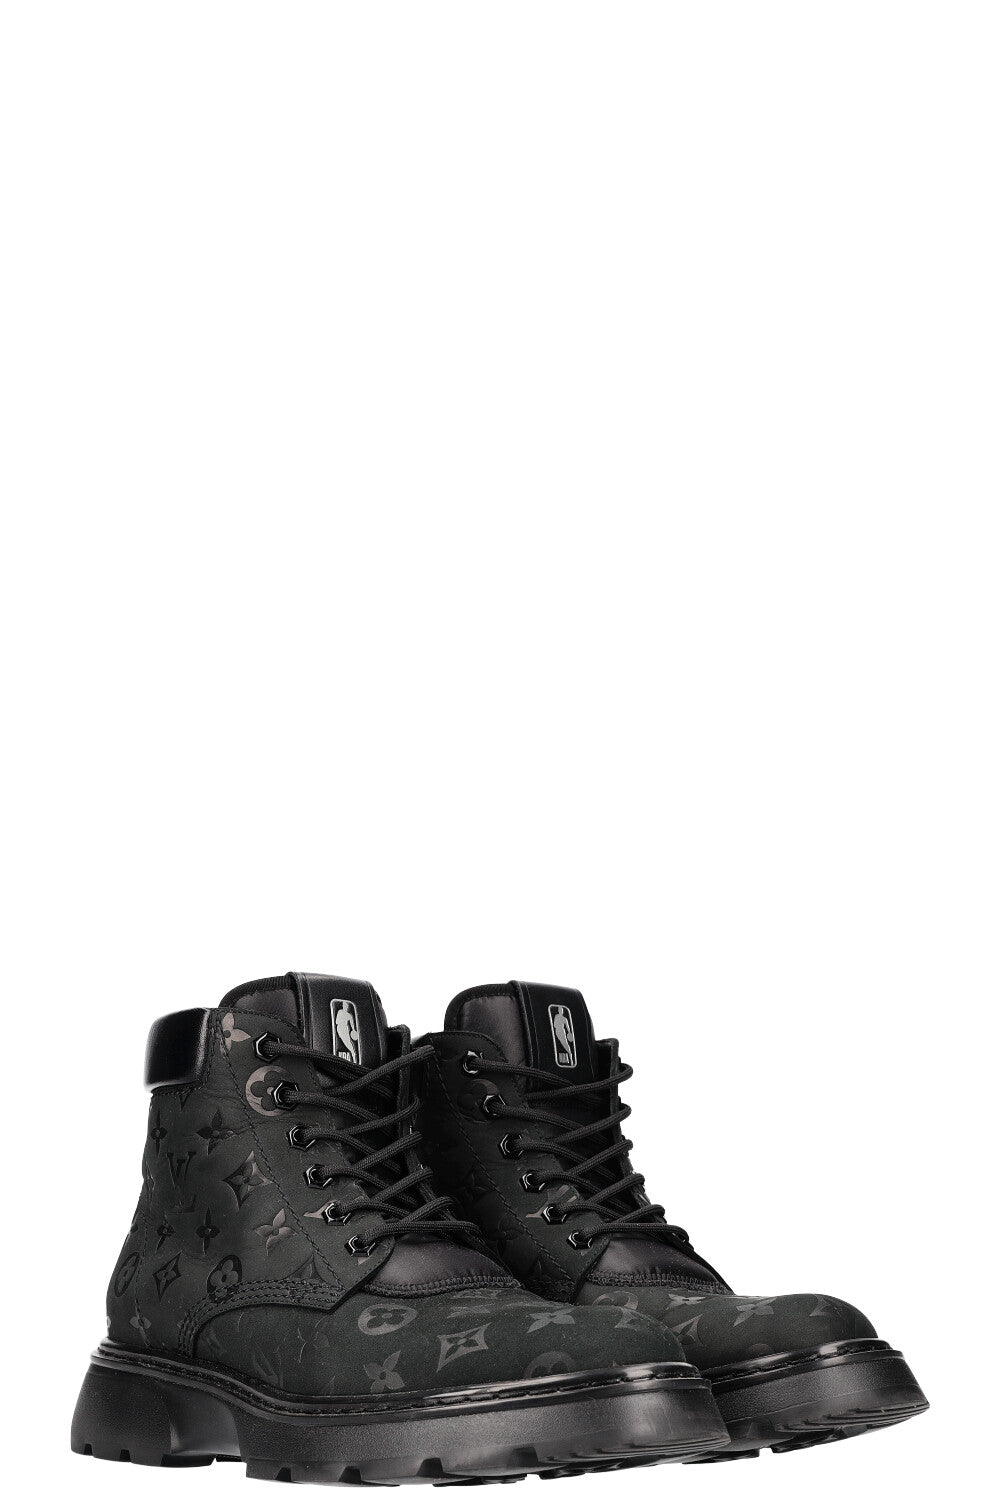 Louis Vuitton x NBA Boots Black MNG